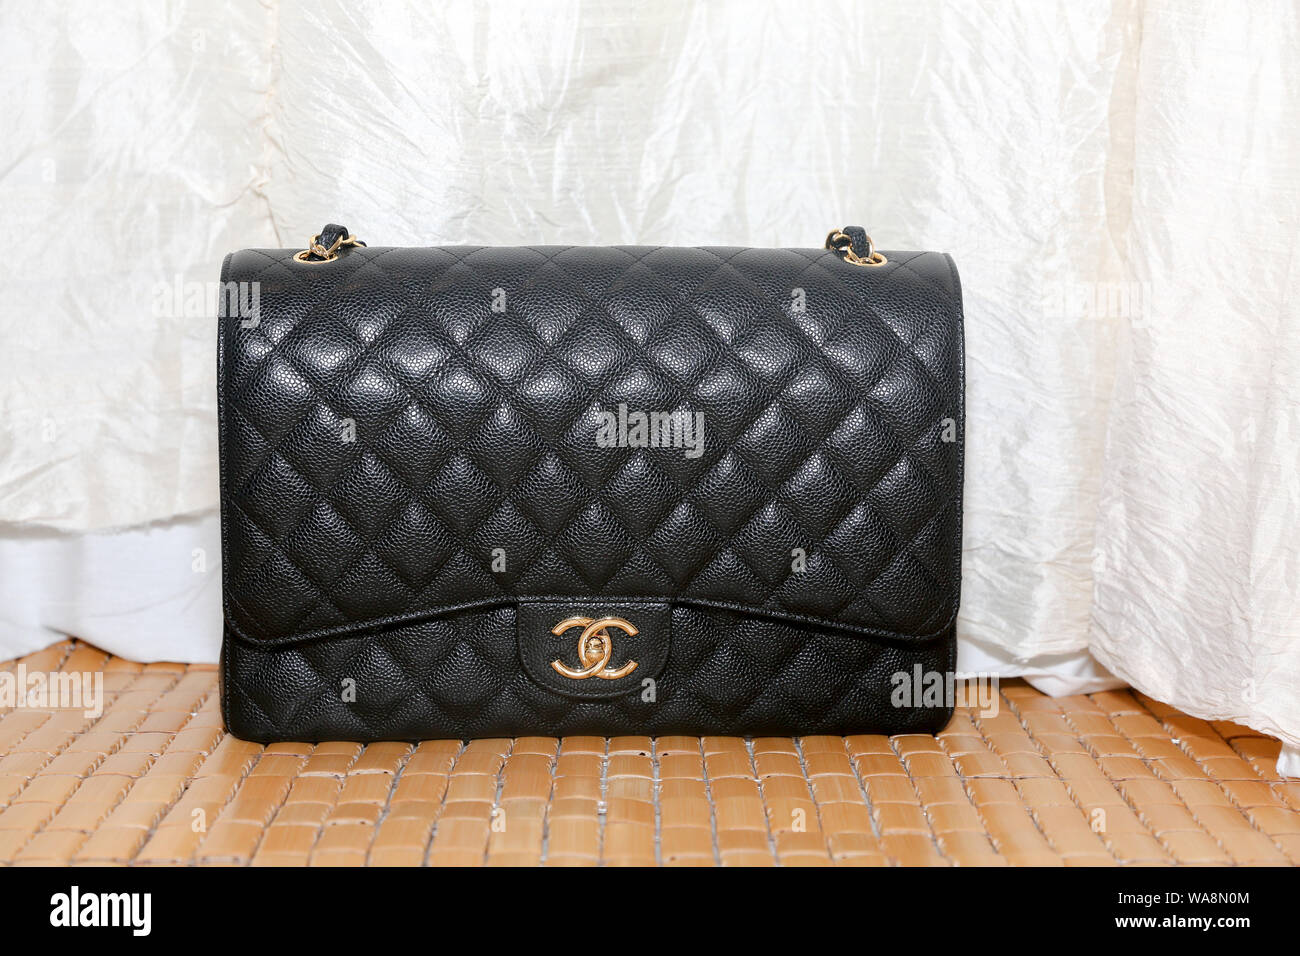 Princeton New Jersey, USA, August 18, 2019: Photo of black Chanel handbag  brand Editorial on white background Stock Photo - Alamy